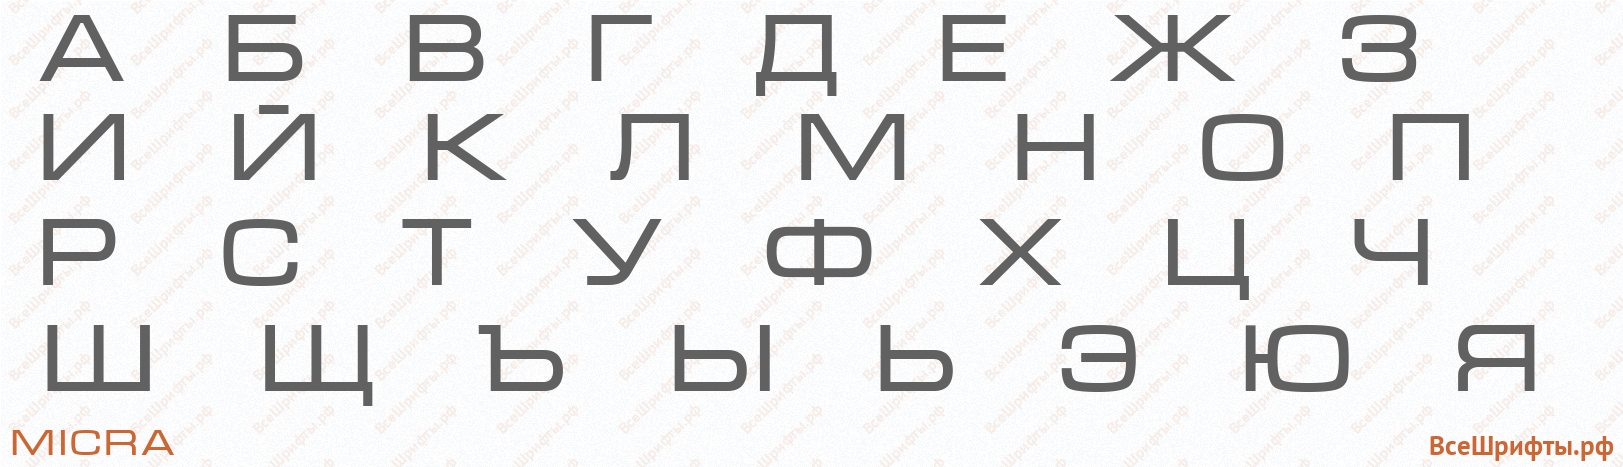 Шрифт Micra с русскими буквами